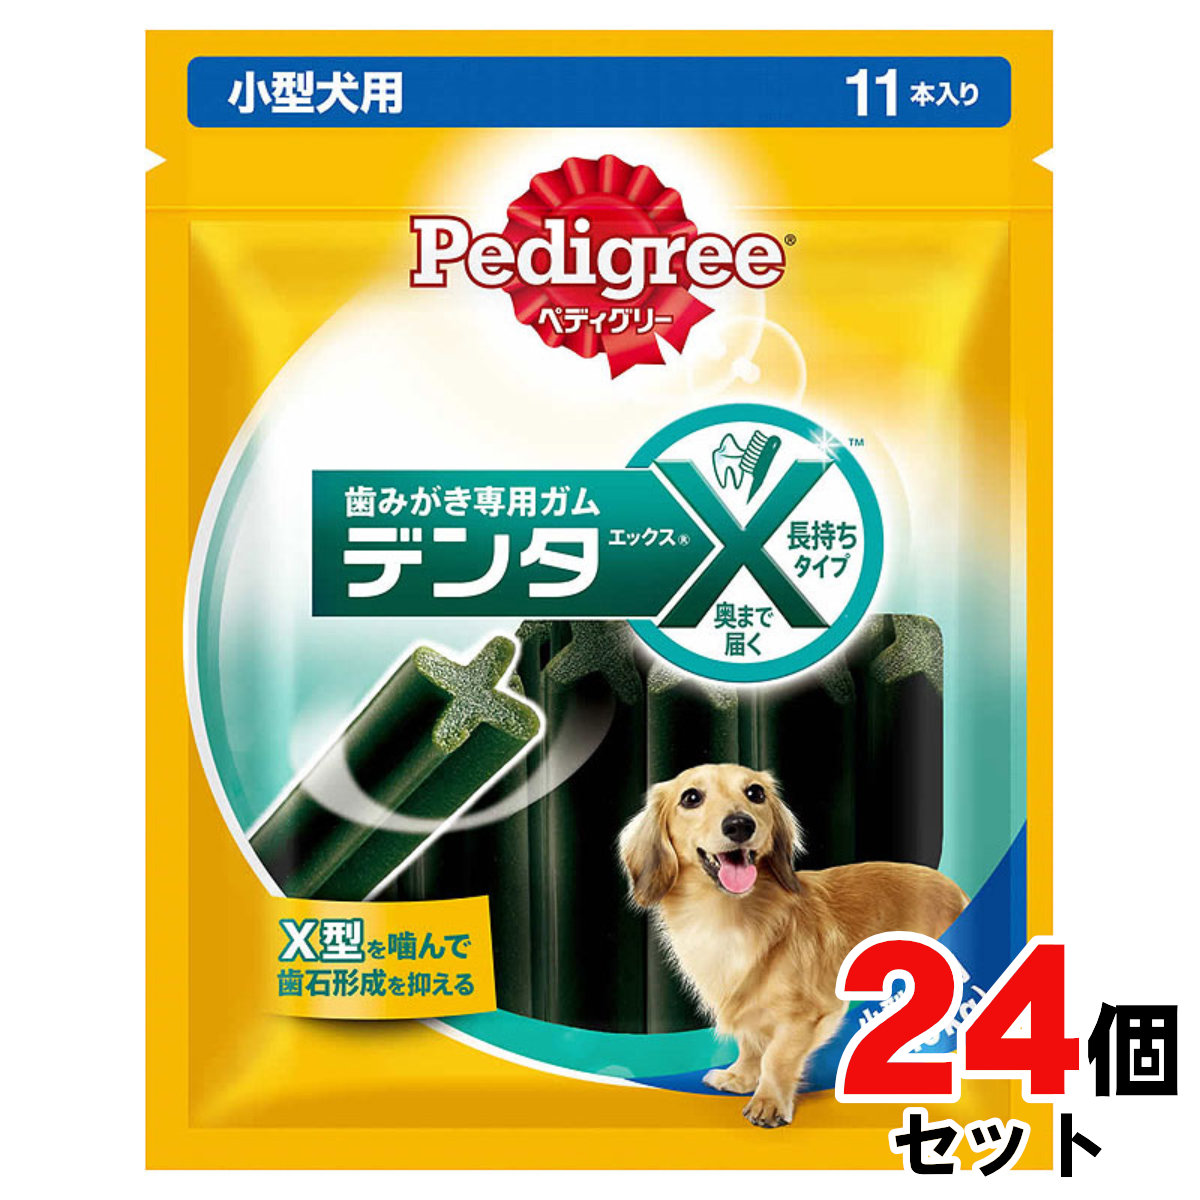 MARS（ペット用品、食品） ペディグリー デンタエックス 小型犬用 レギュラー 11本×24個 ペディグリー 犬用おやつ、ガムの商品画像